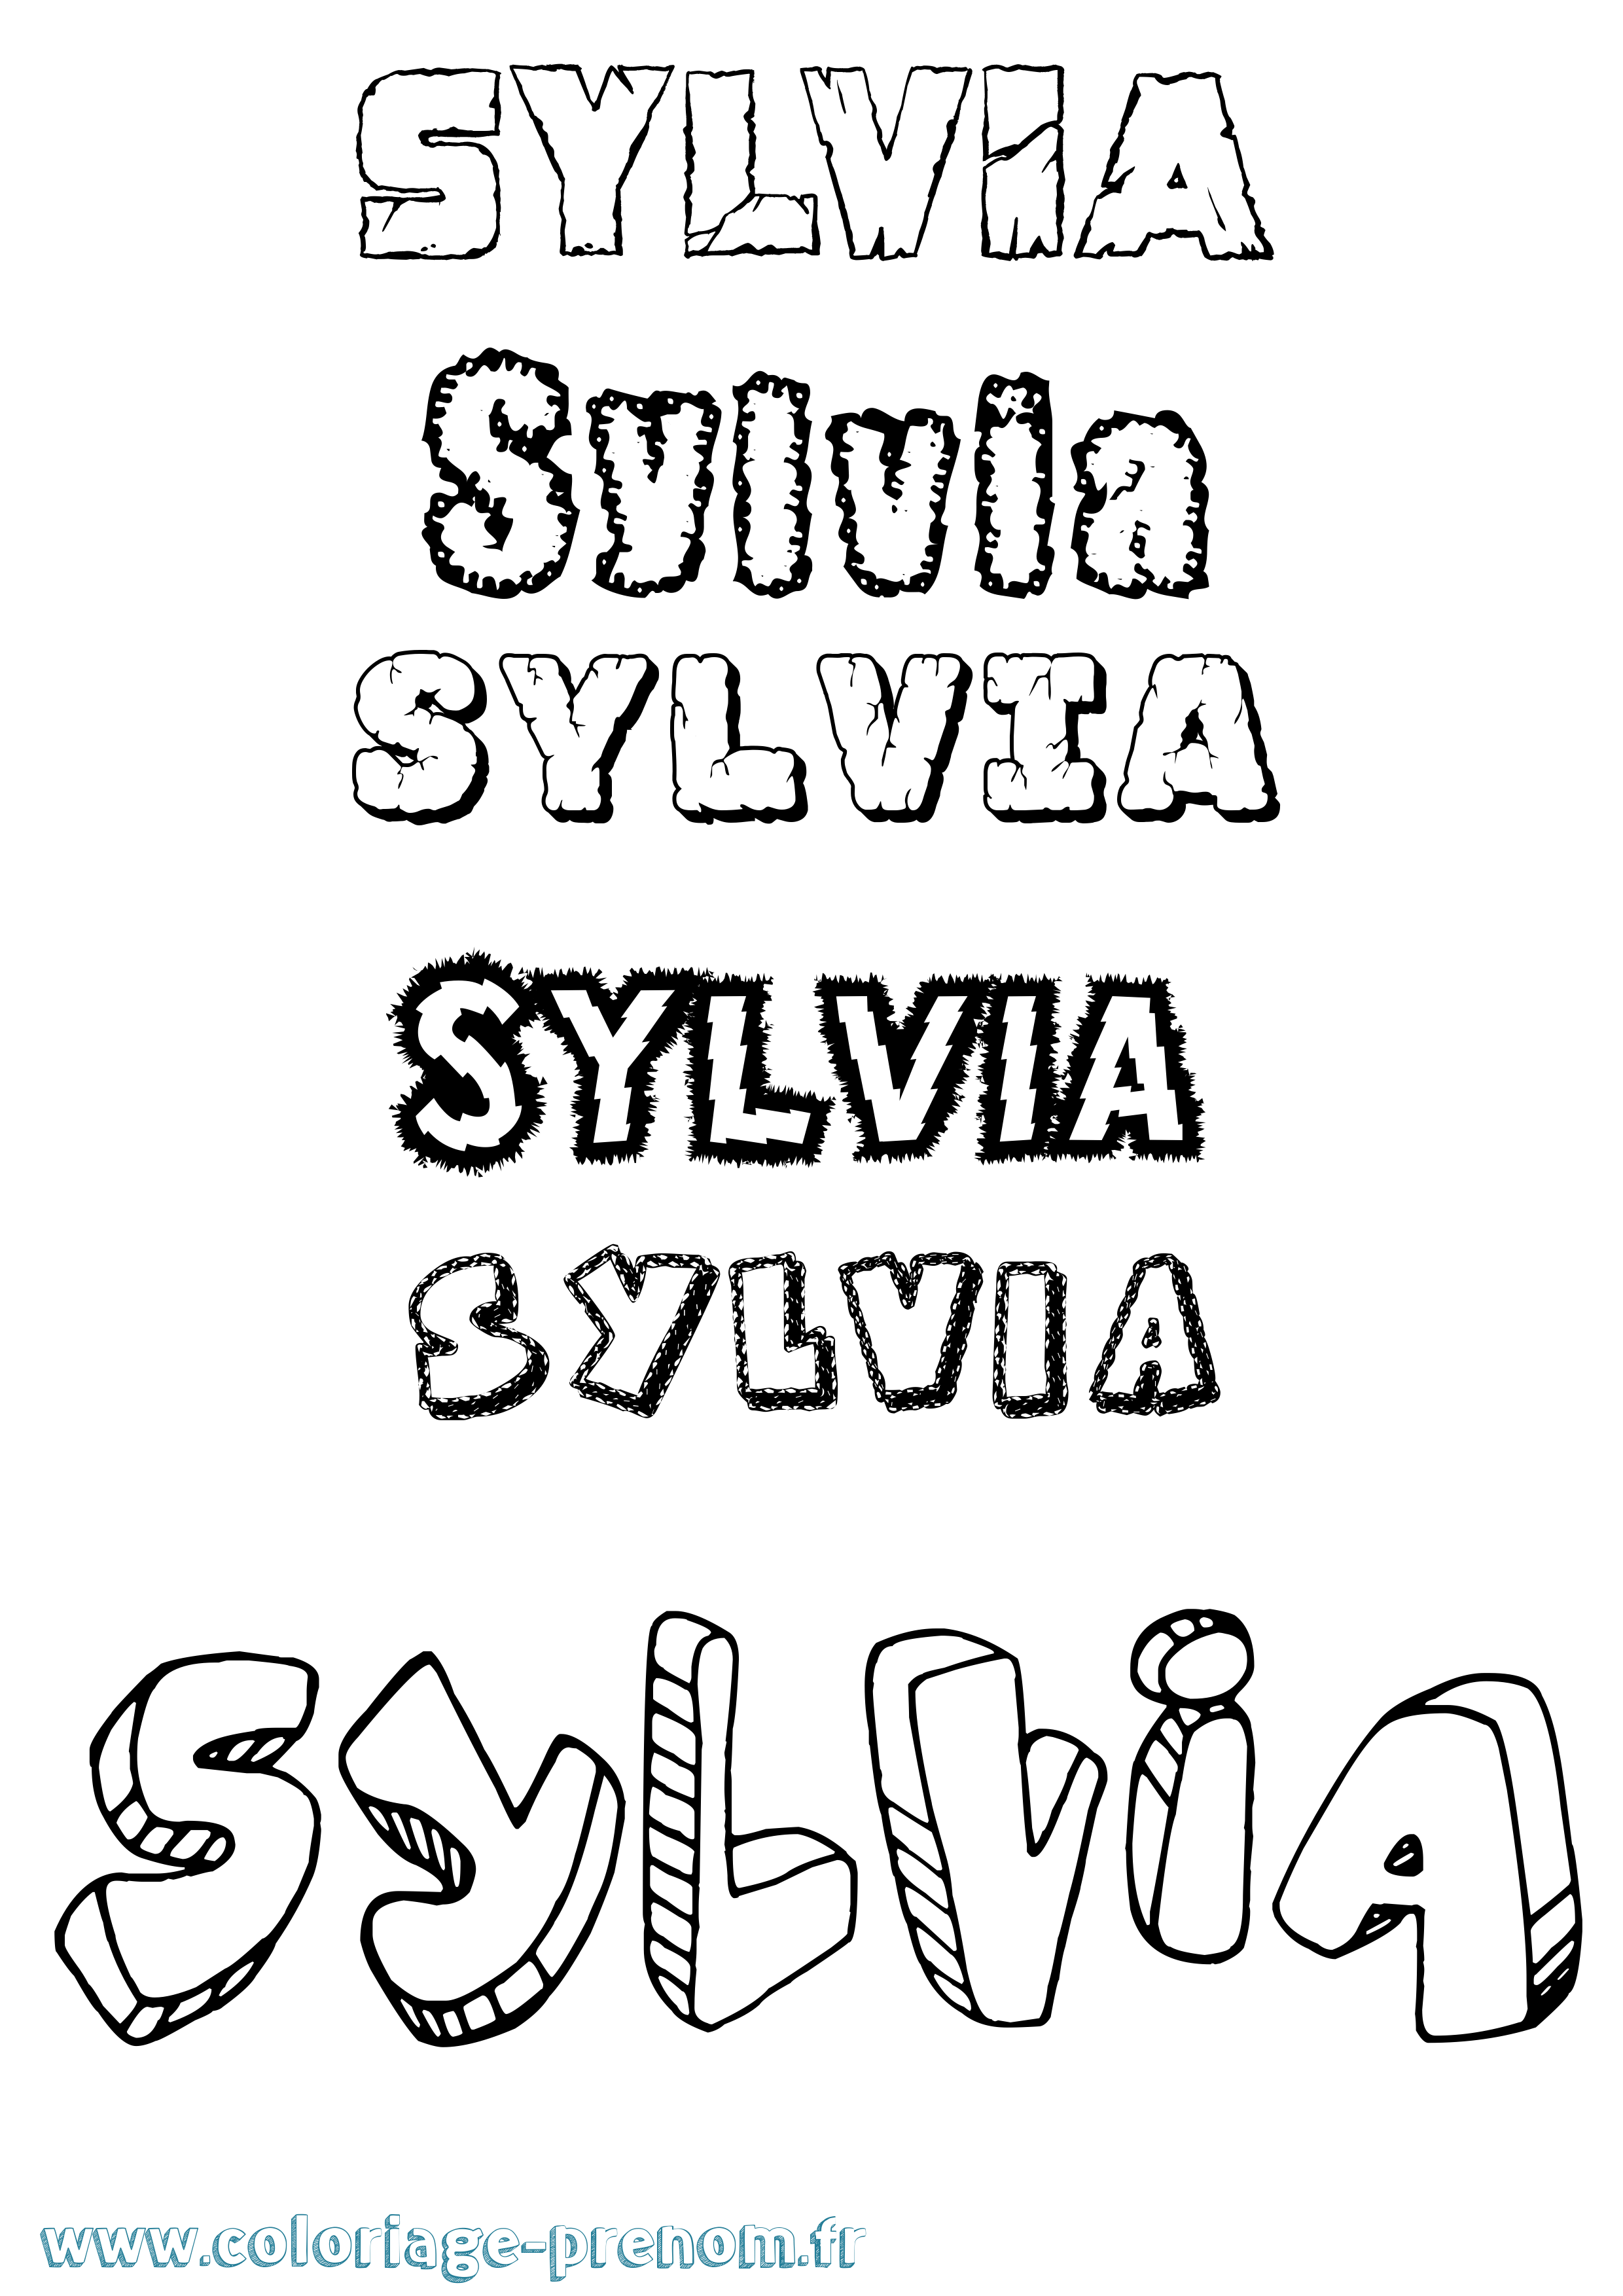 Coloriage prénom Sylvia